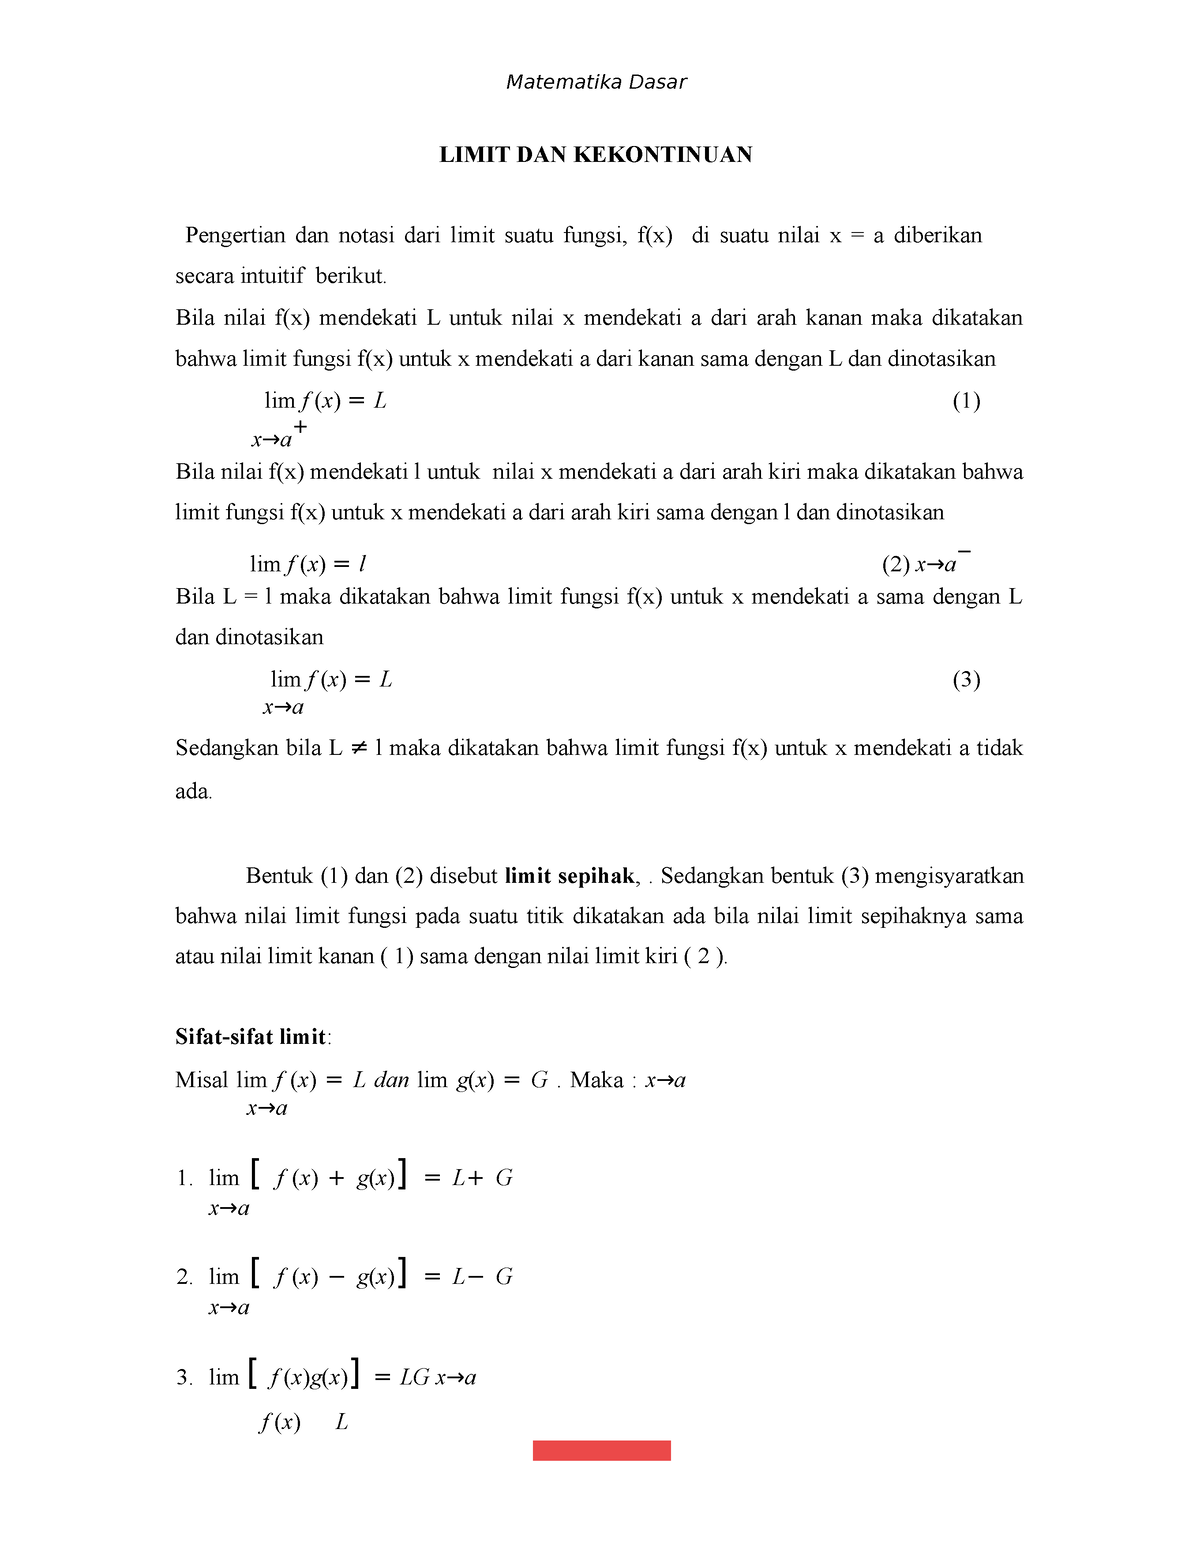 Limit Dan Kekontinuan Limit Dan Kekontinuan Pengertian Dan Notasi Dari Limit Suatu Fungsi Fx 9768